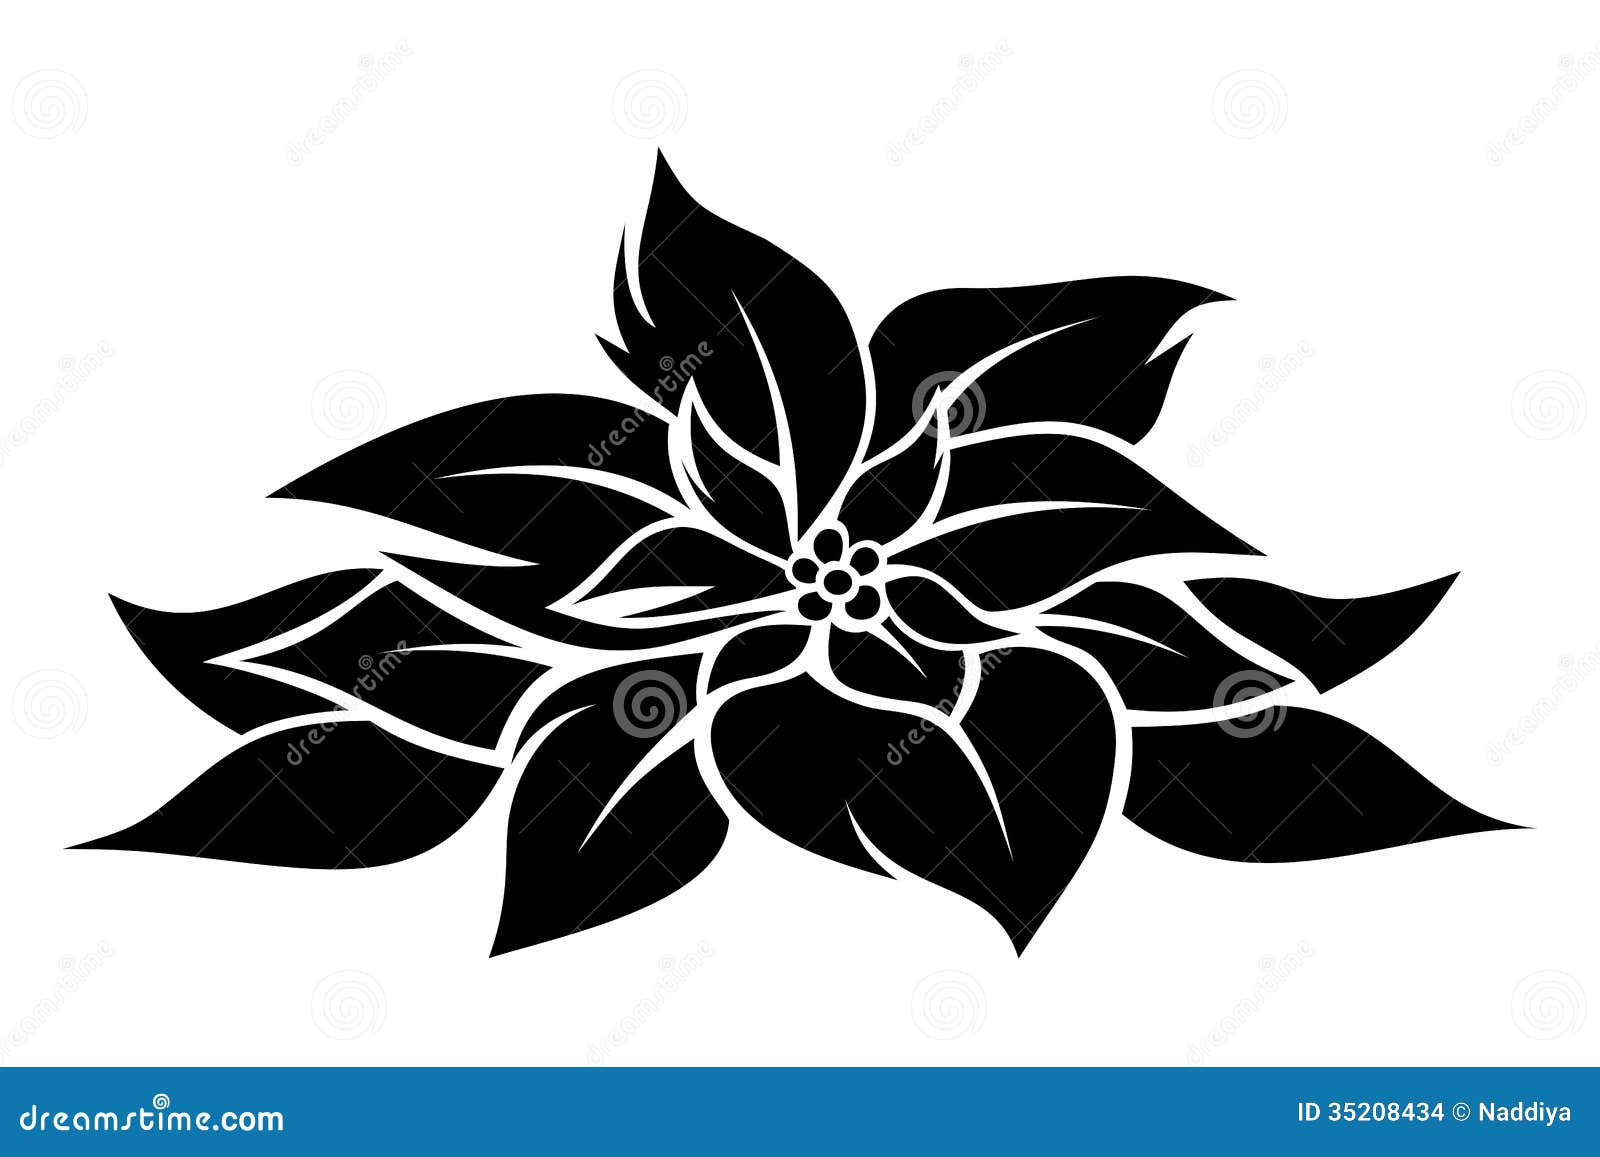 free black and white poinsettia clipart - photo #20